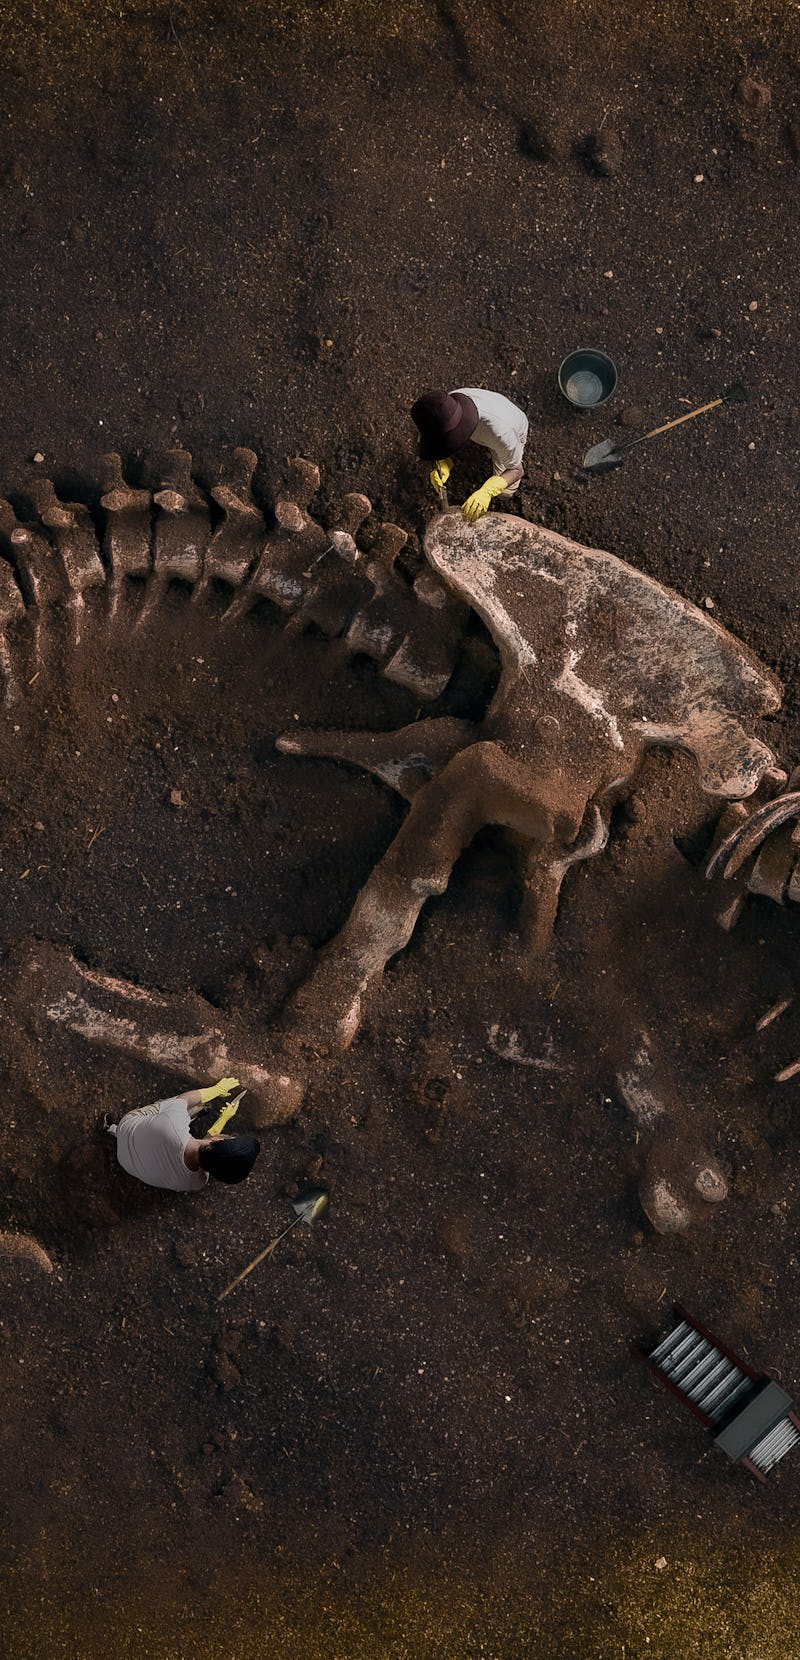 Dinosaur Fossil (Tyrannosaurus Rex) Found by Archaeologists